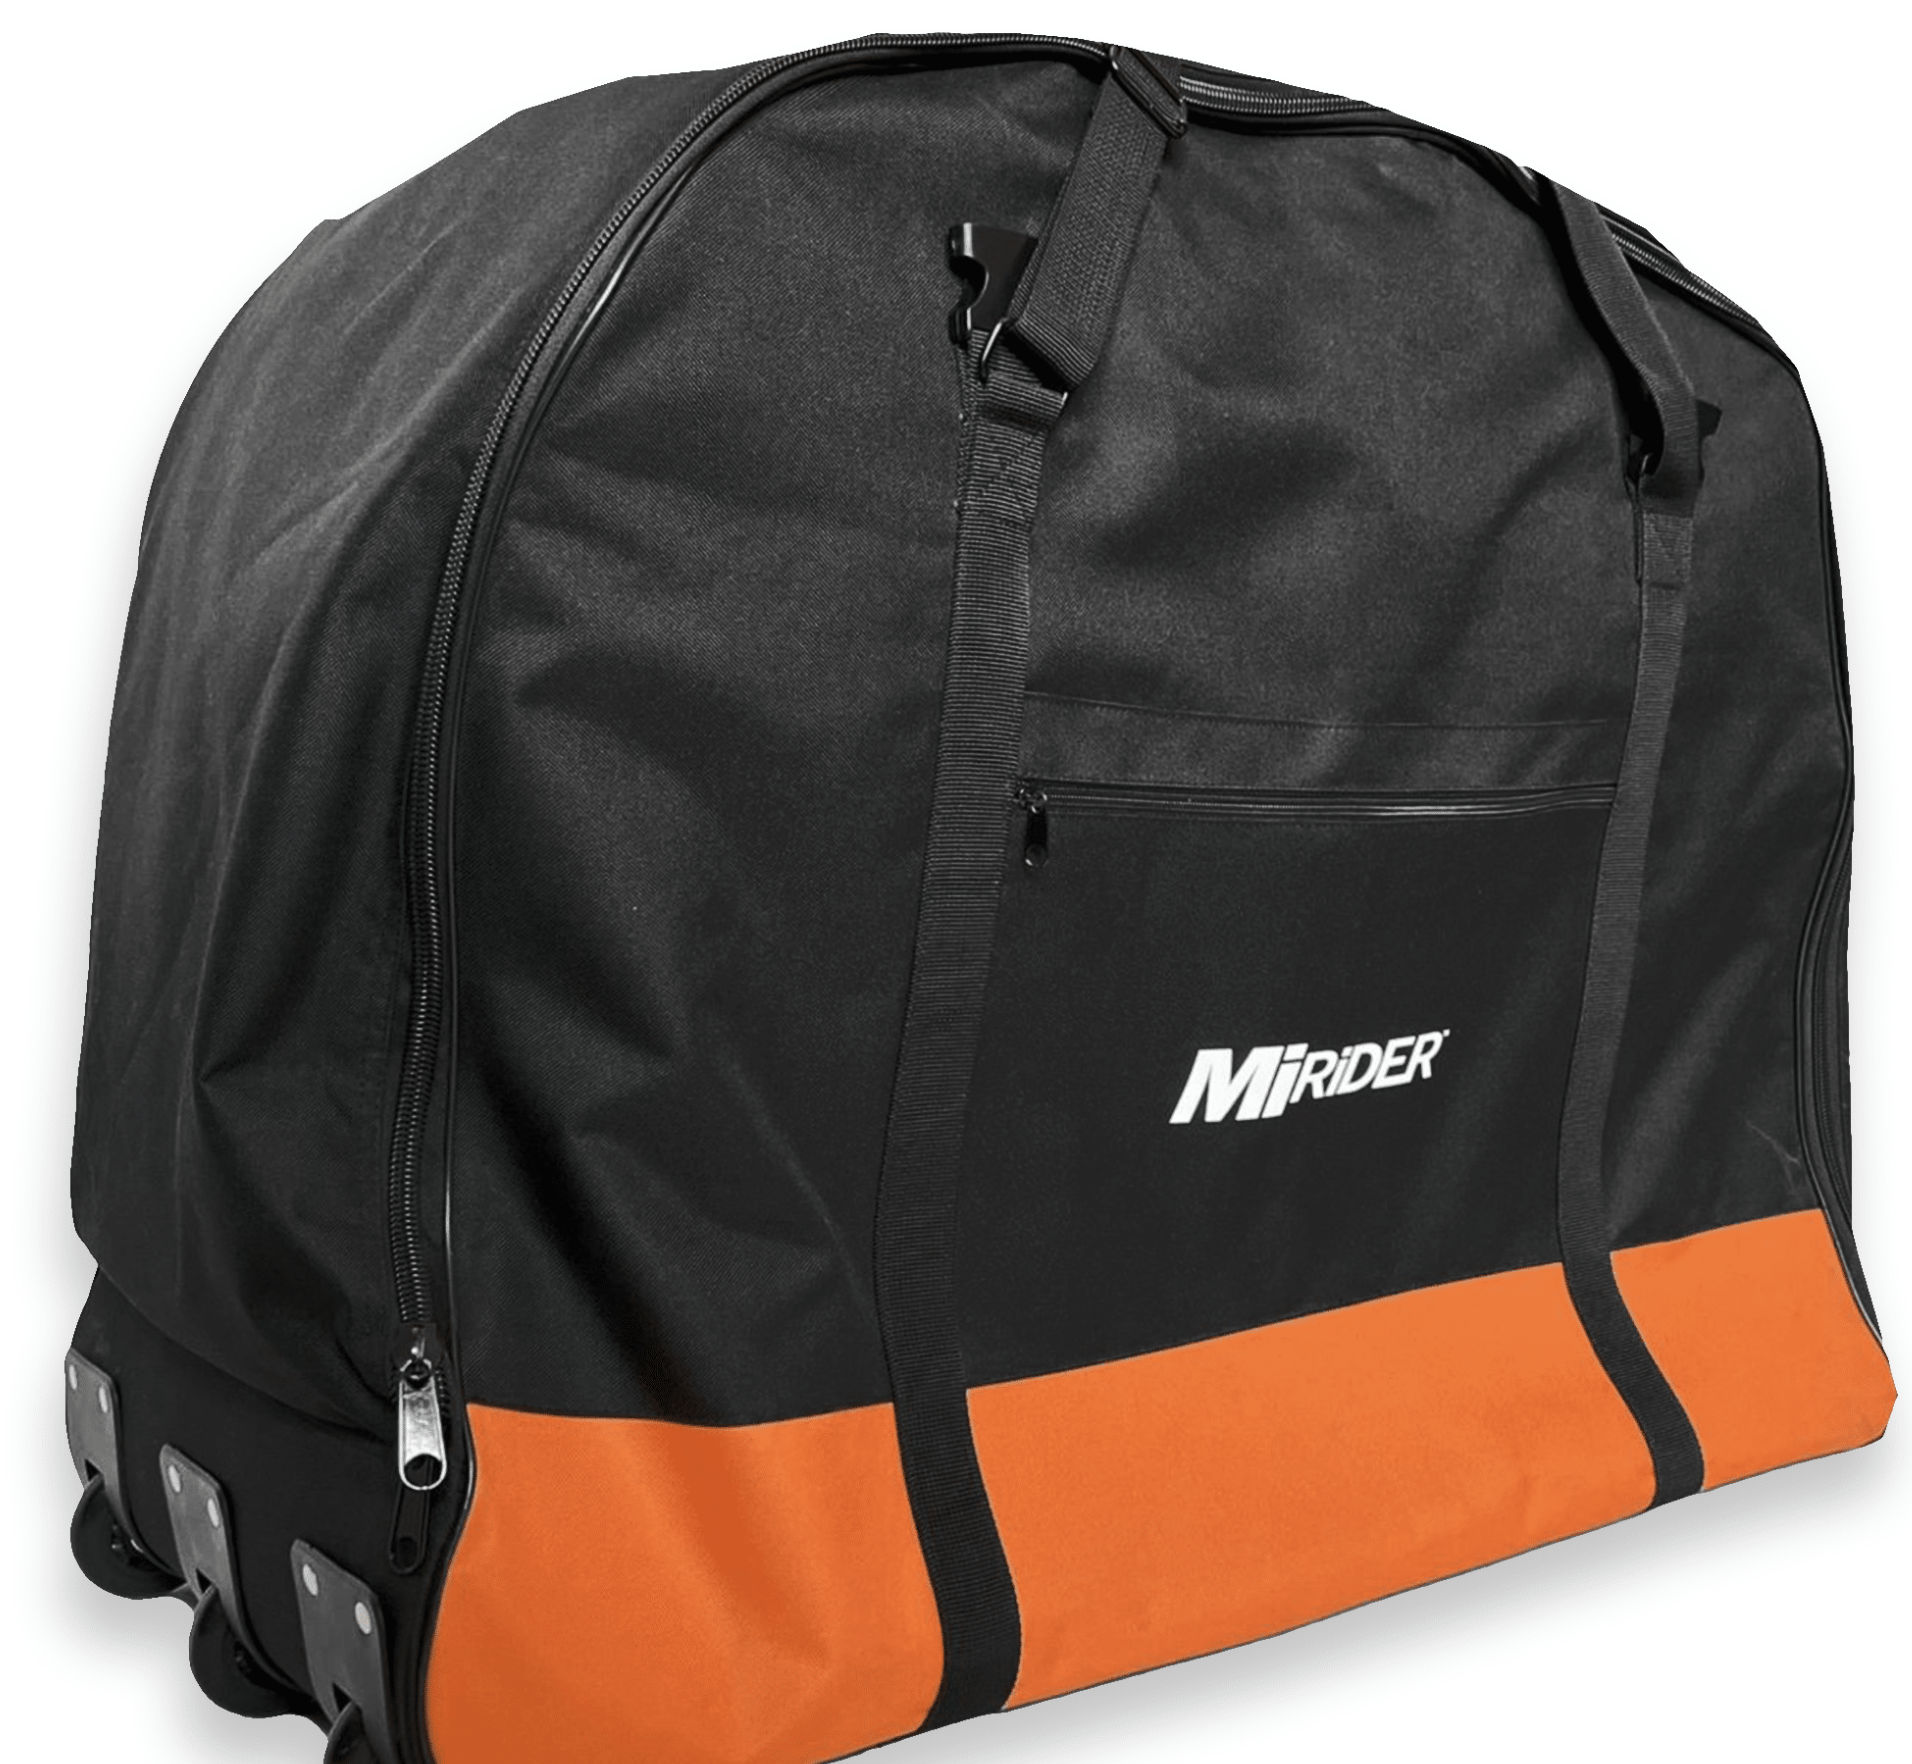 MiRiDER storage bag with wheels